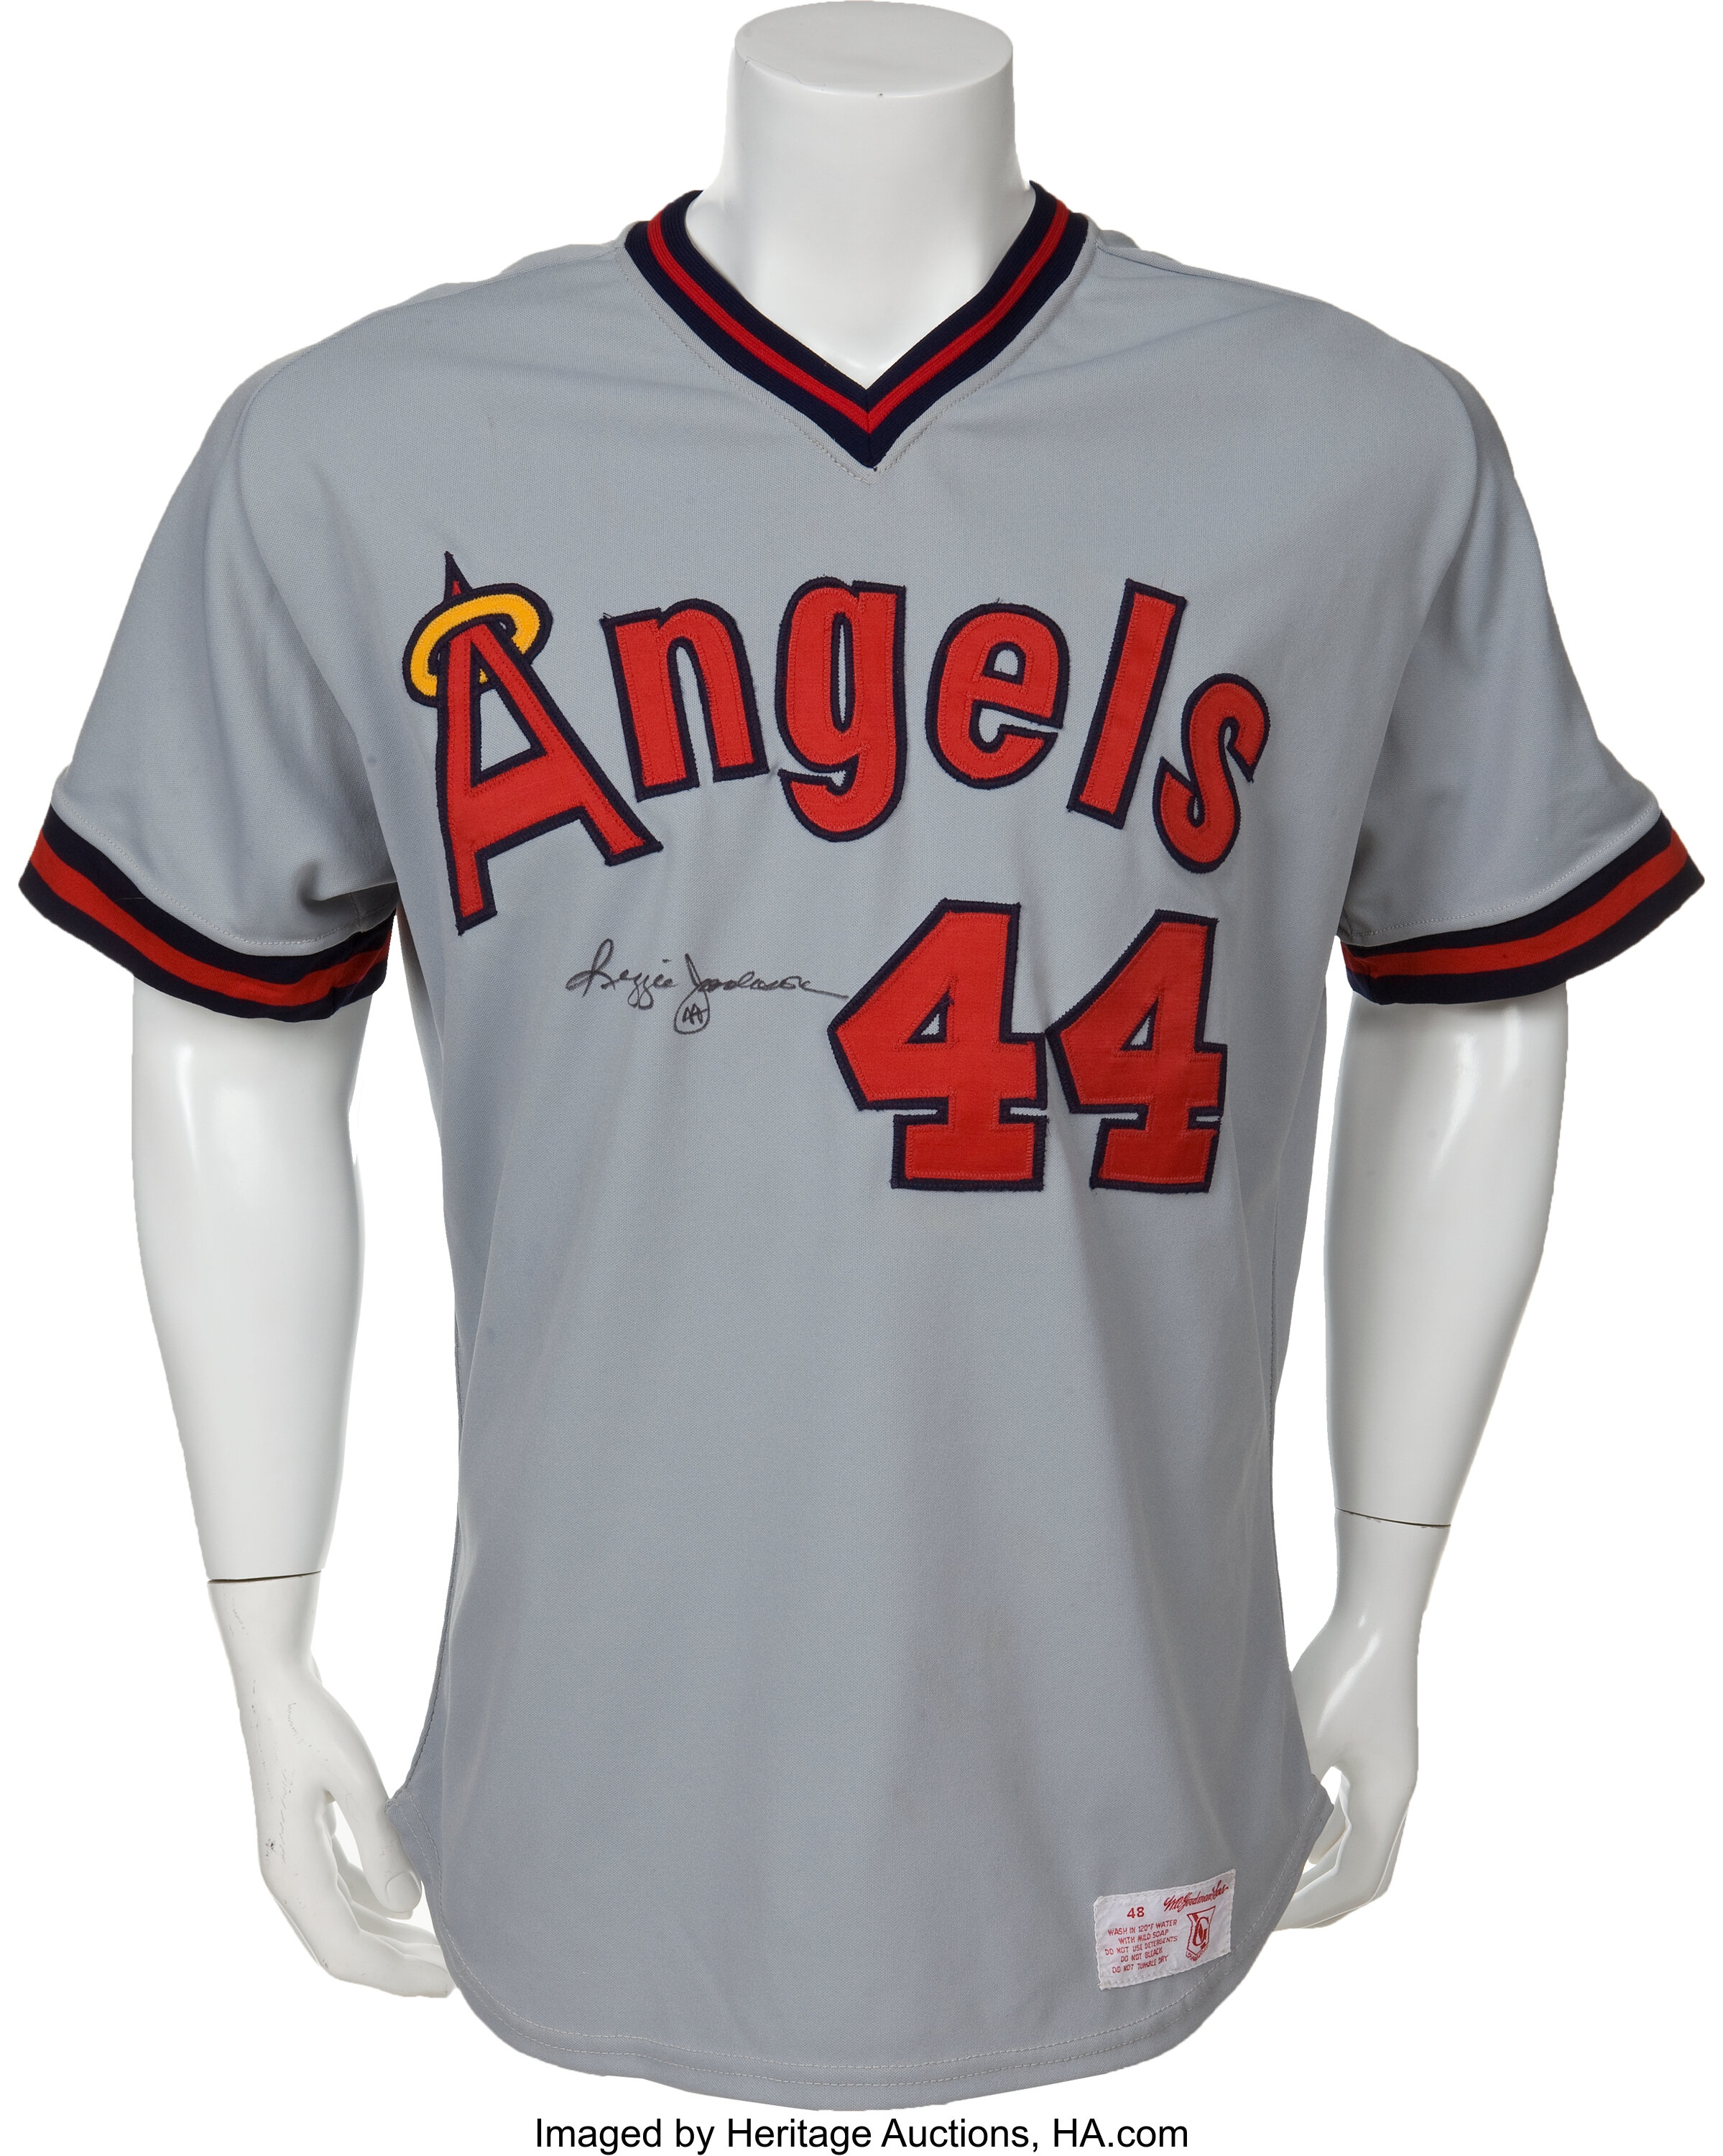 Reggie Jackson player worn jersey patch baseball card (Anaheim